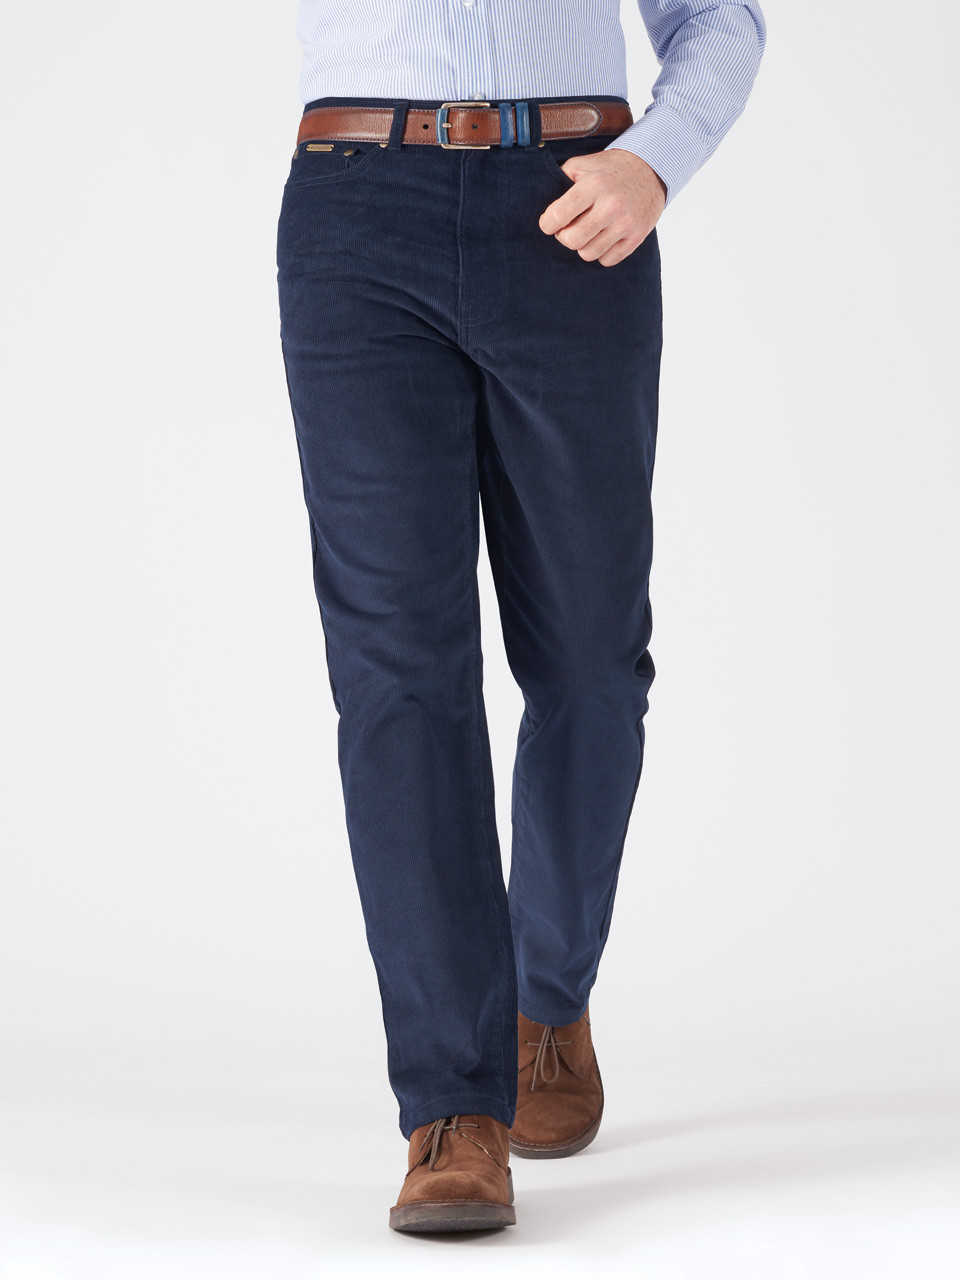 The Slim Fit Indigo Light Jeans for Men - DANA AND DEKOR